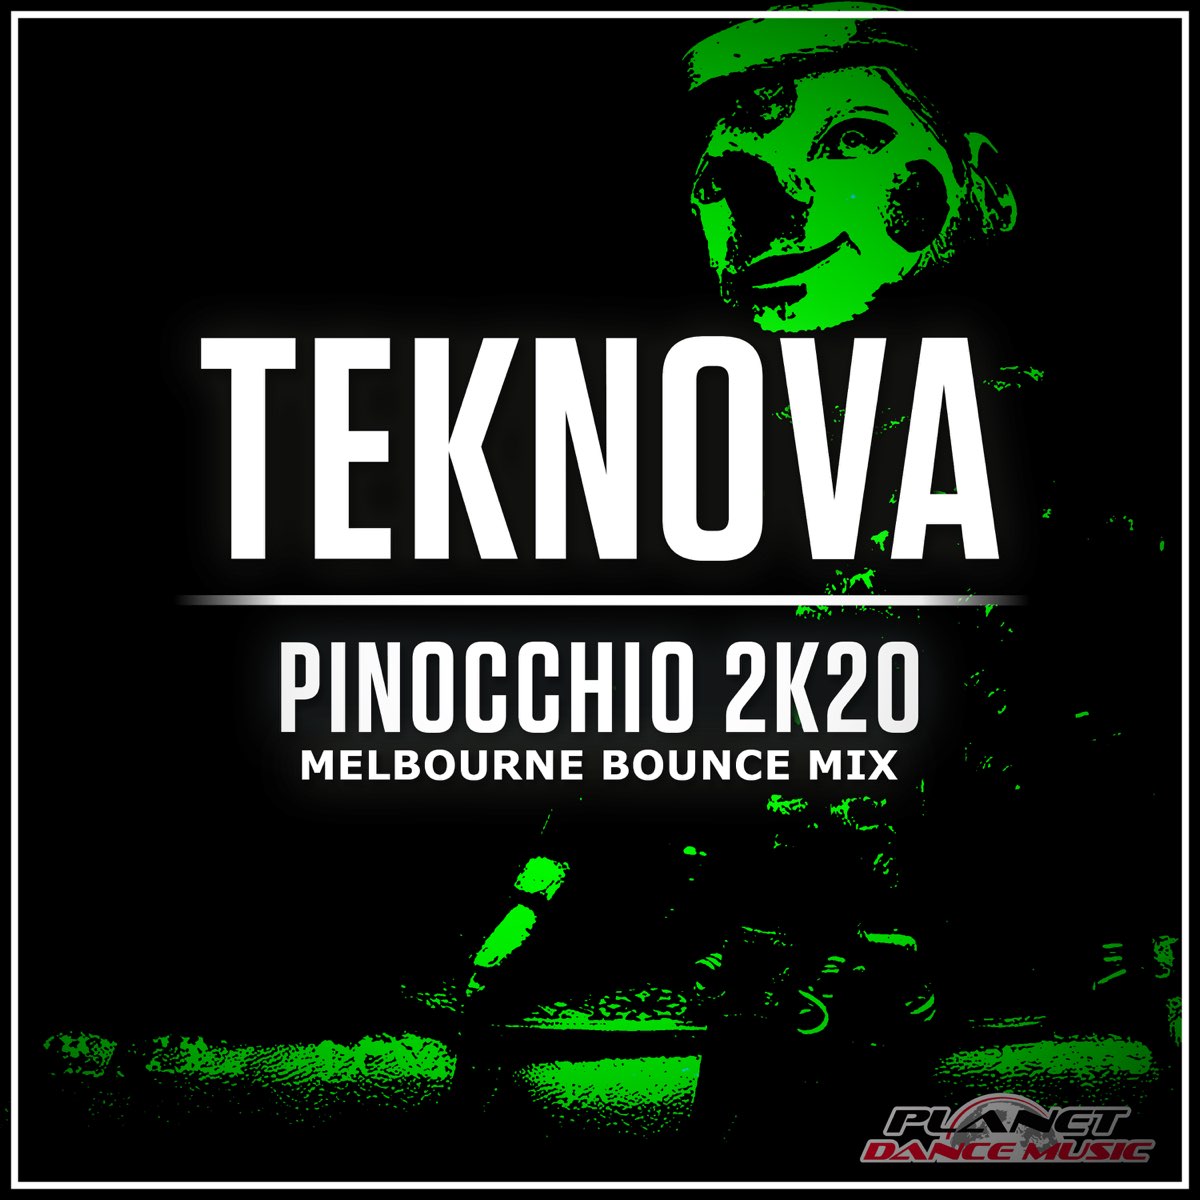 Pinocchio 2K20 Bounce Mix) - Single by Teknova on Apple Music